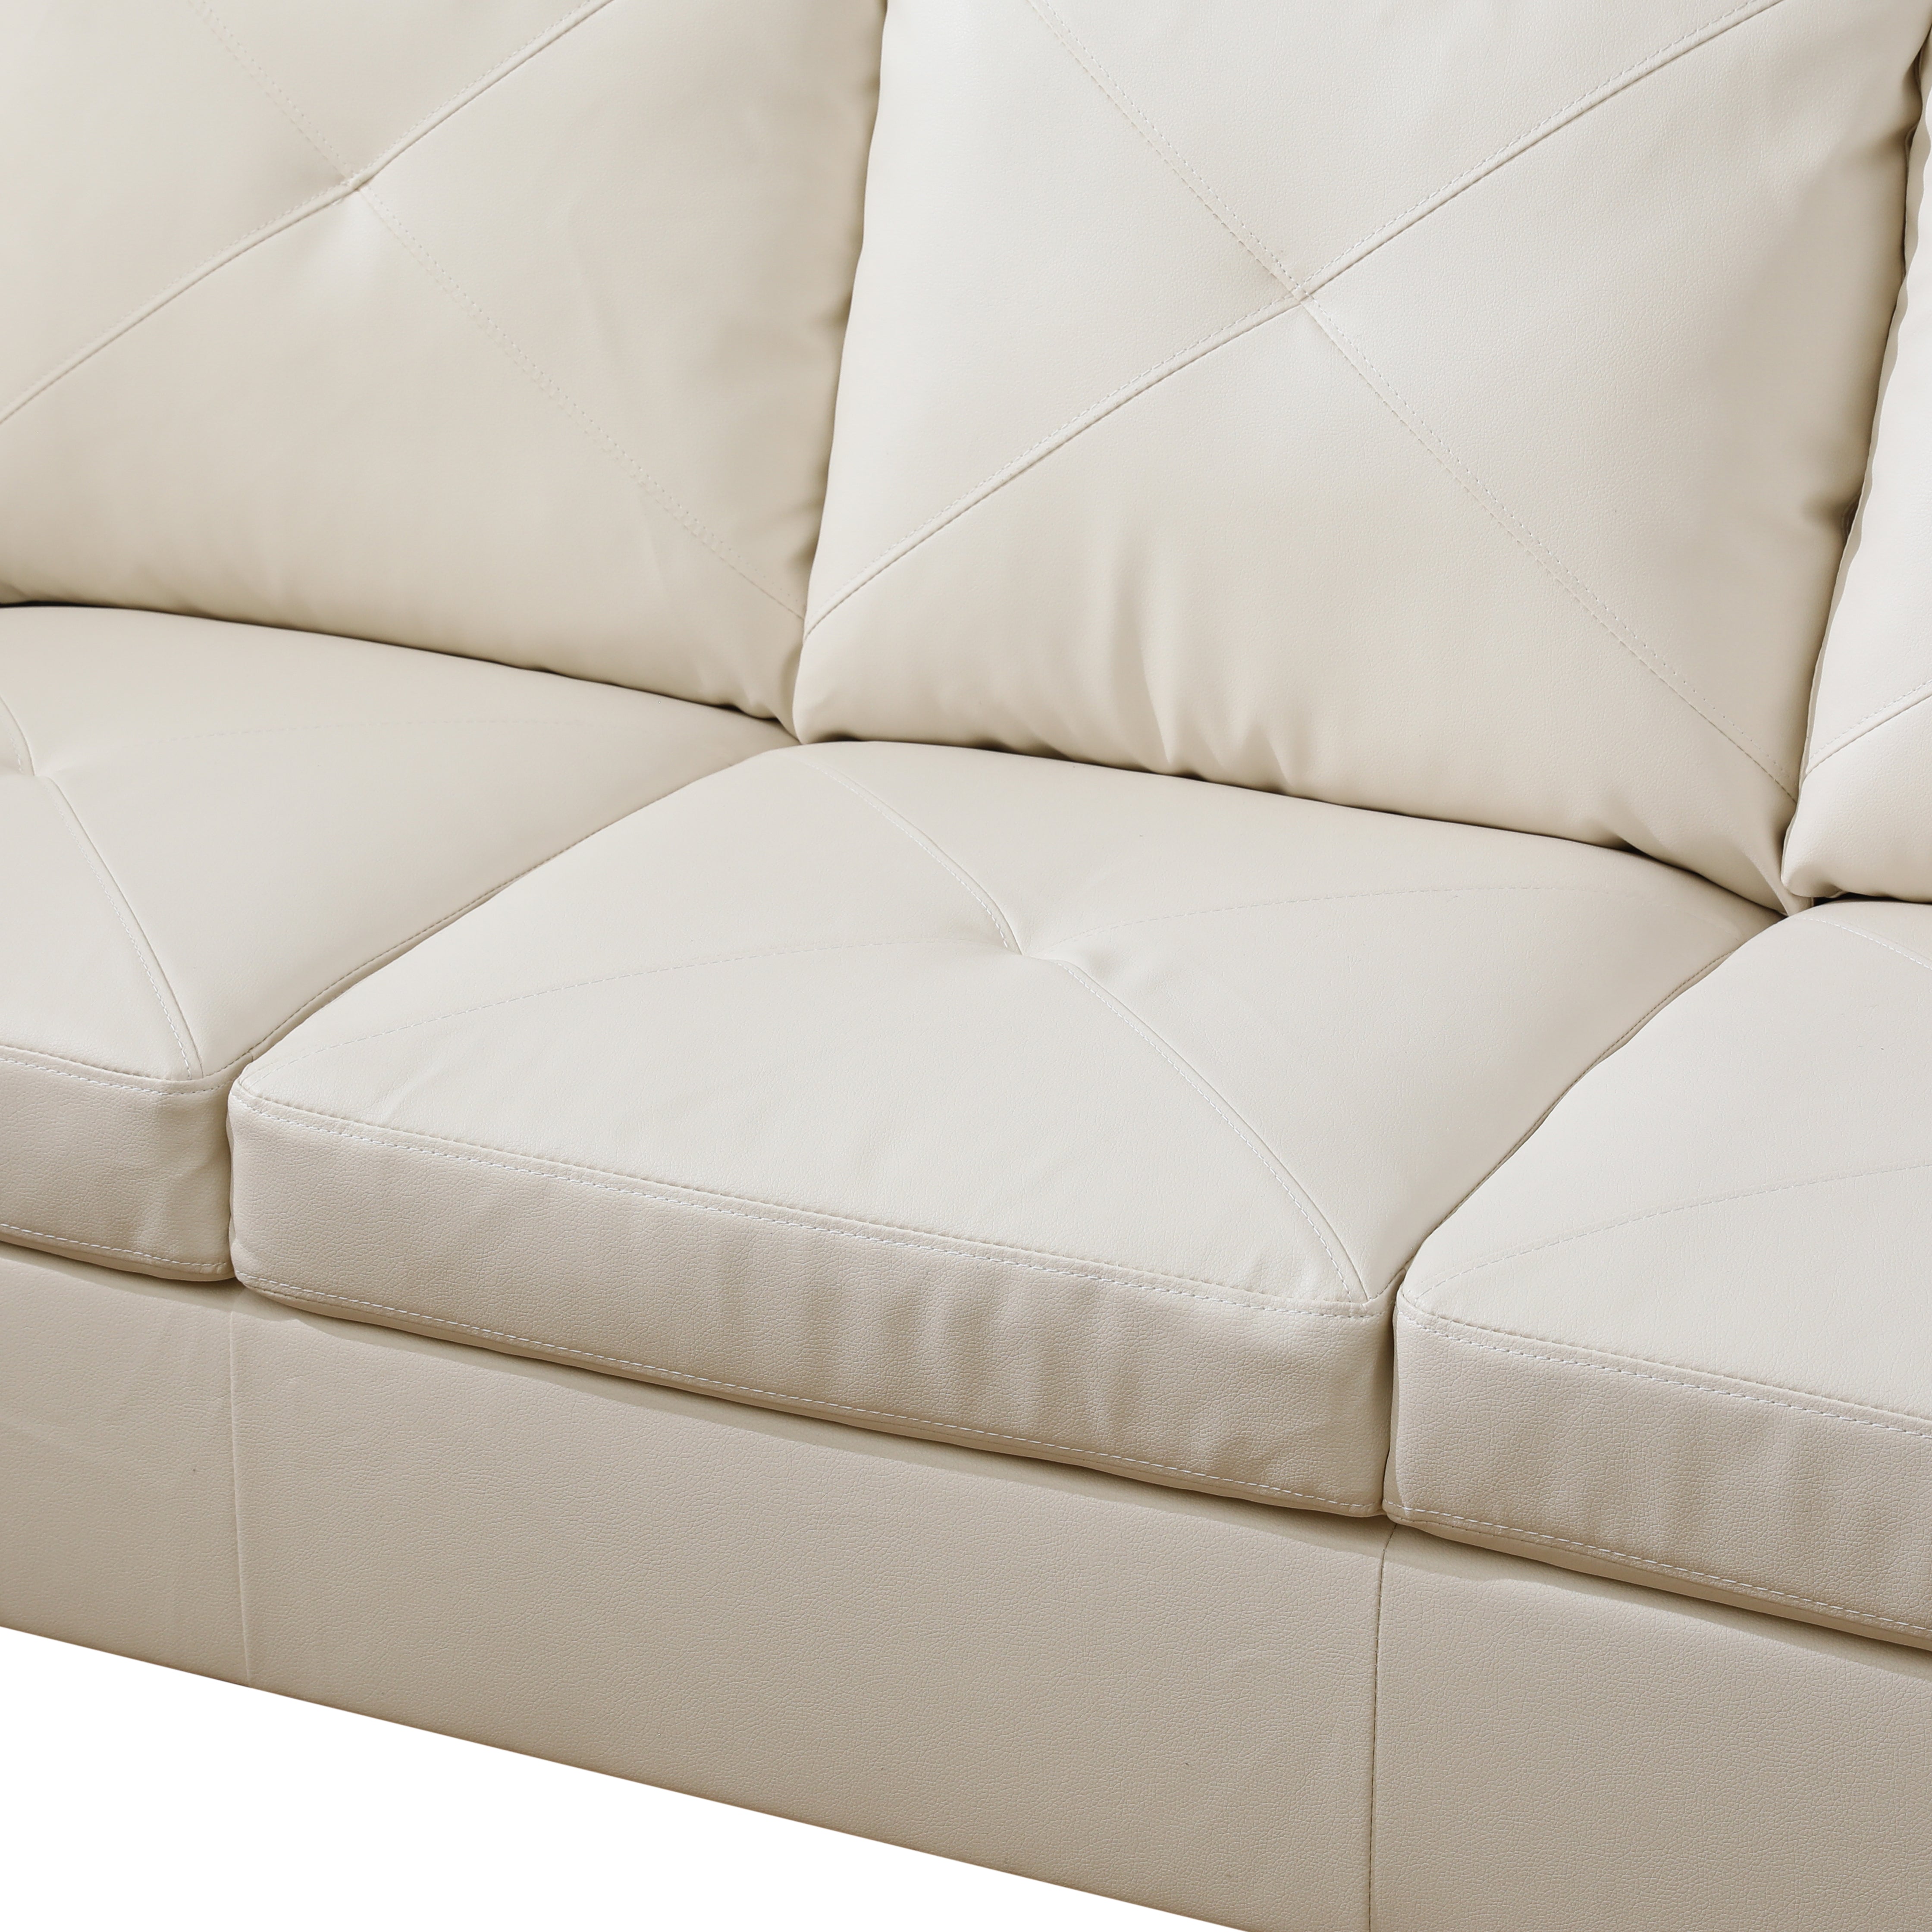 Ainehome White L-Shaped Faux Leather Sofa Set